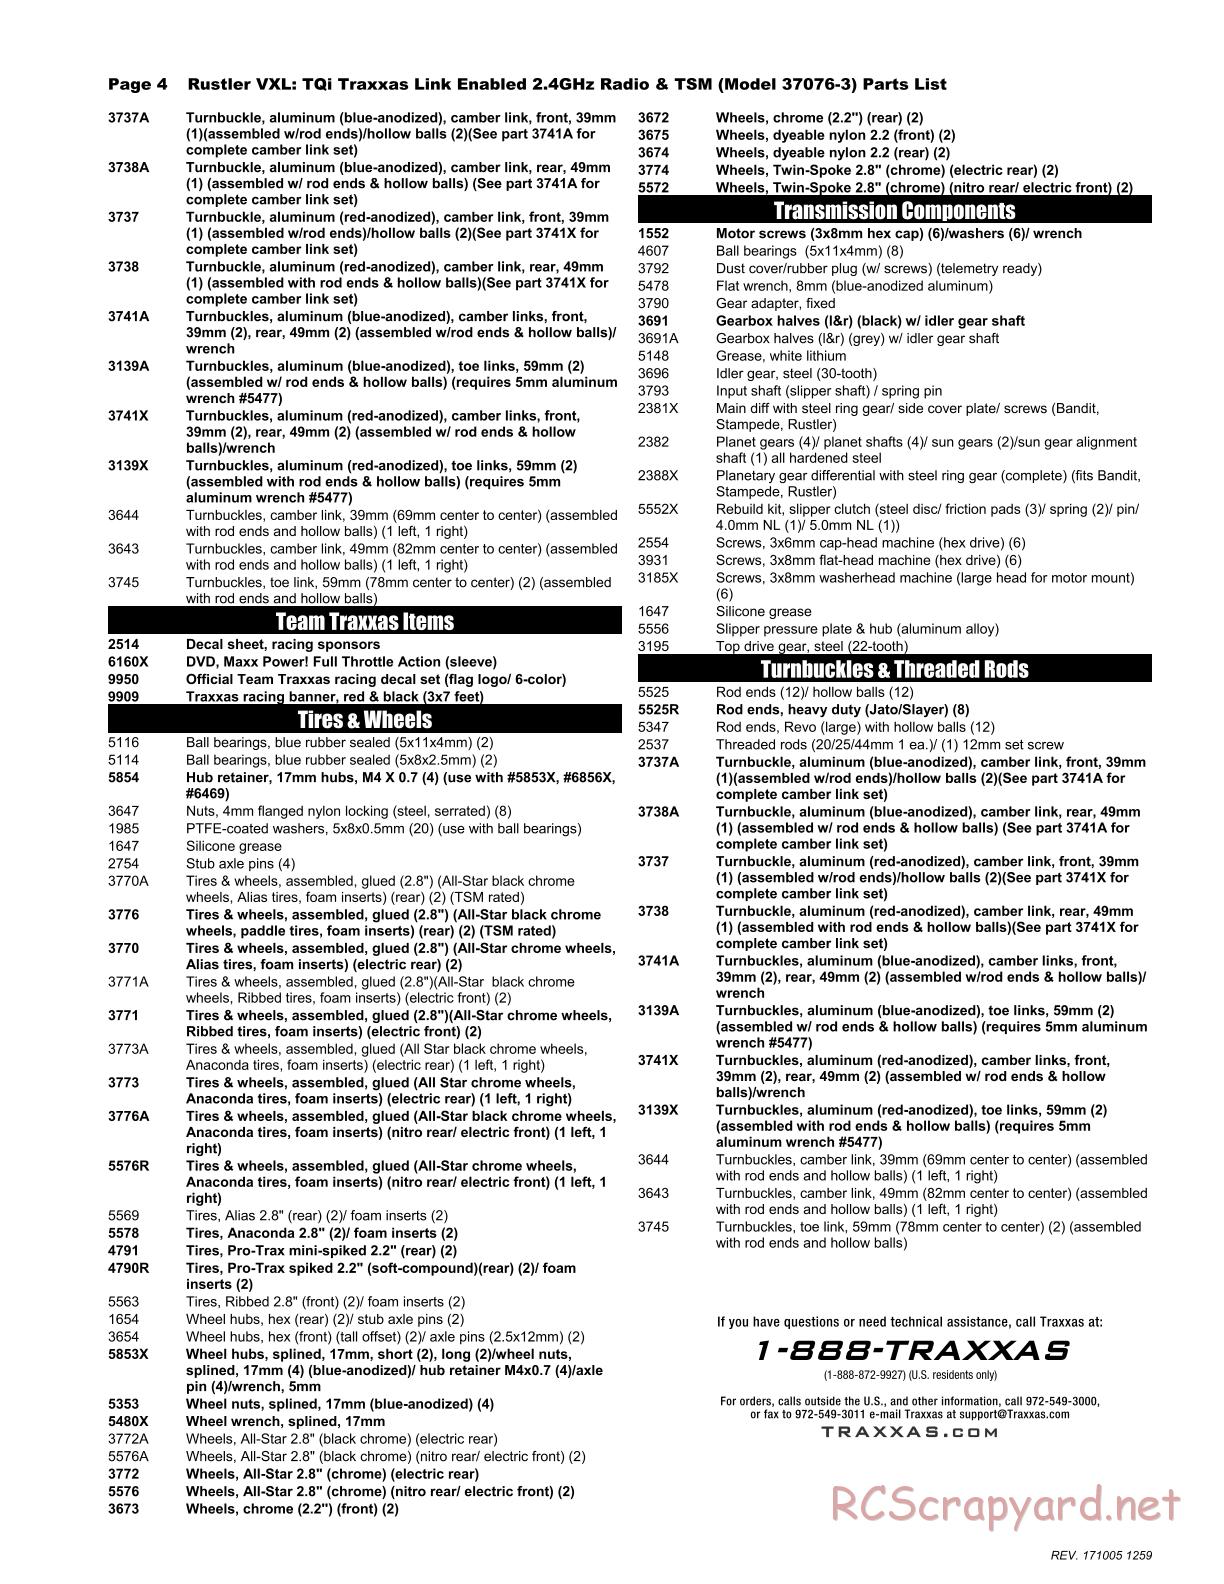 Traxxas - Rustler VXL TSM (2015) - Parts List - Page 4